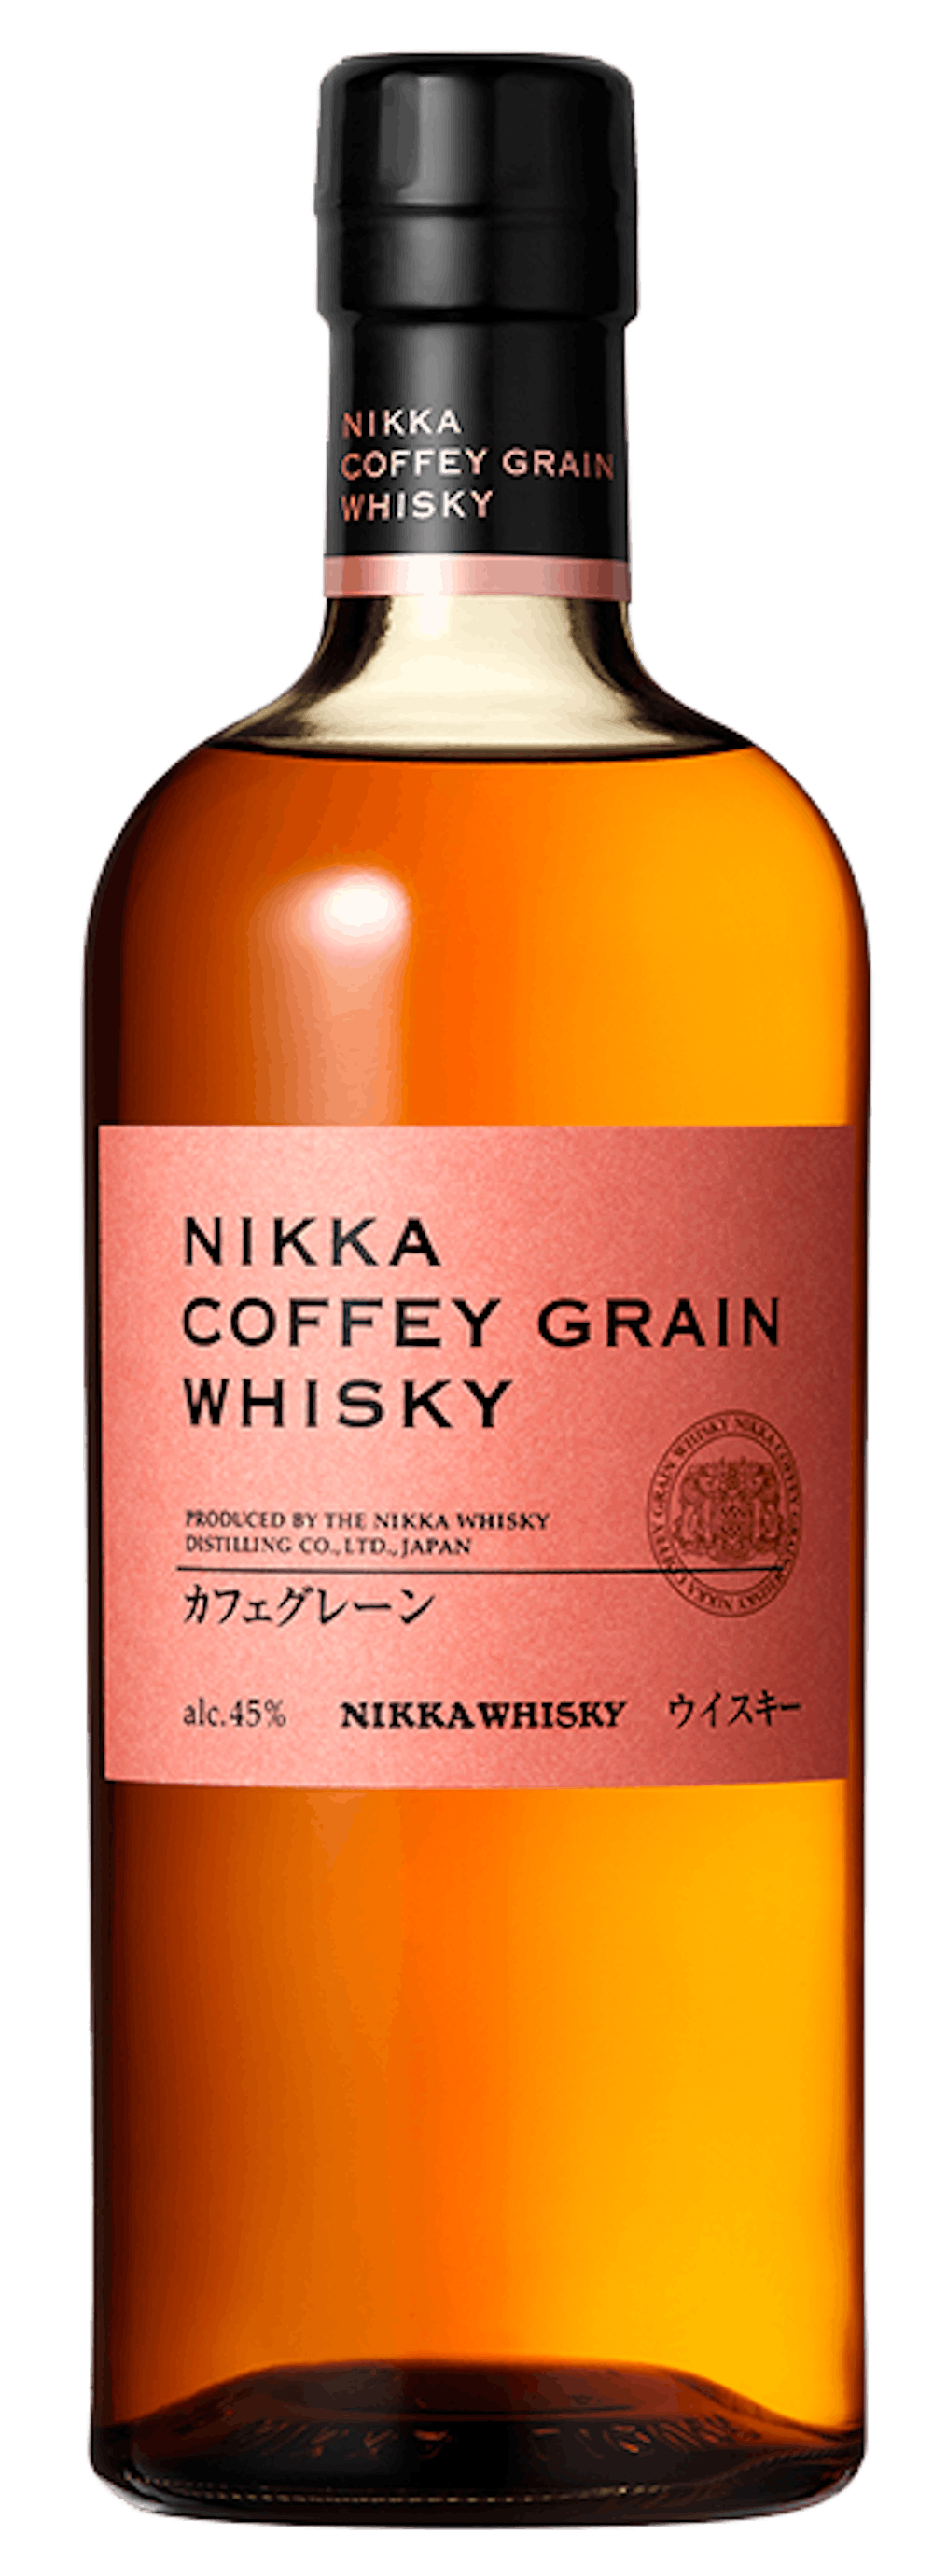 Nikka 'Coffey Grain' 90prf Whisky 750ml